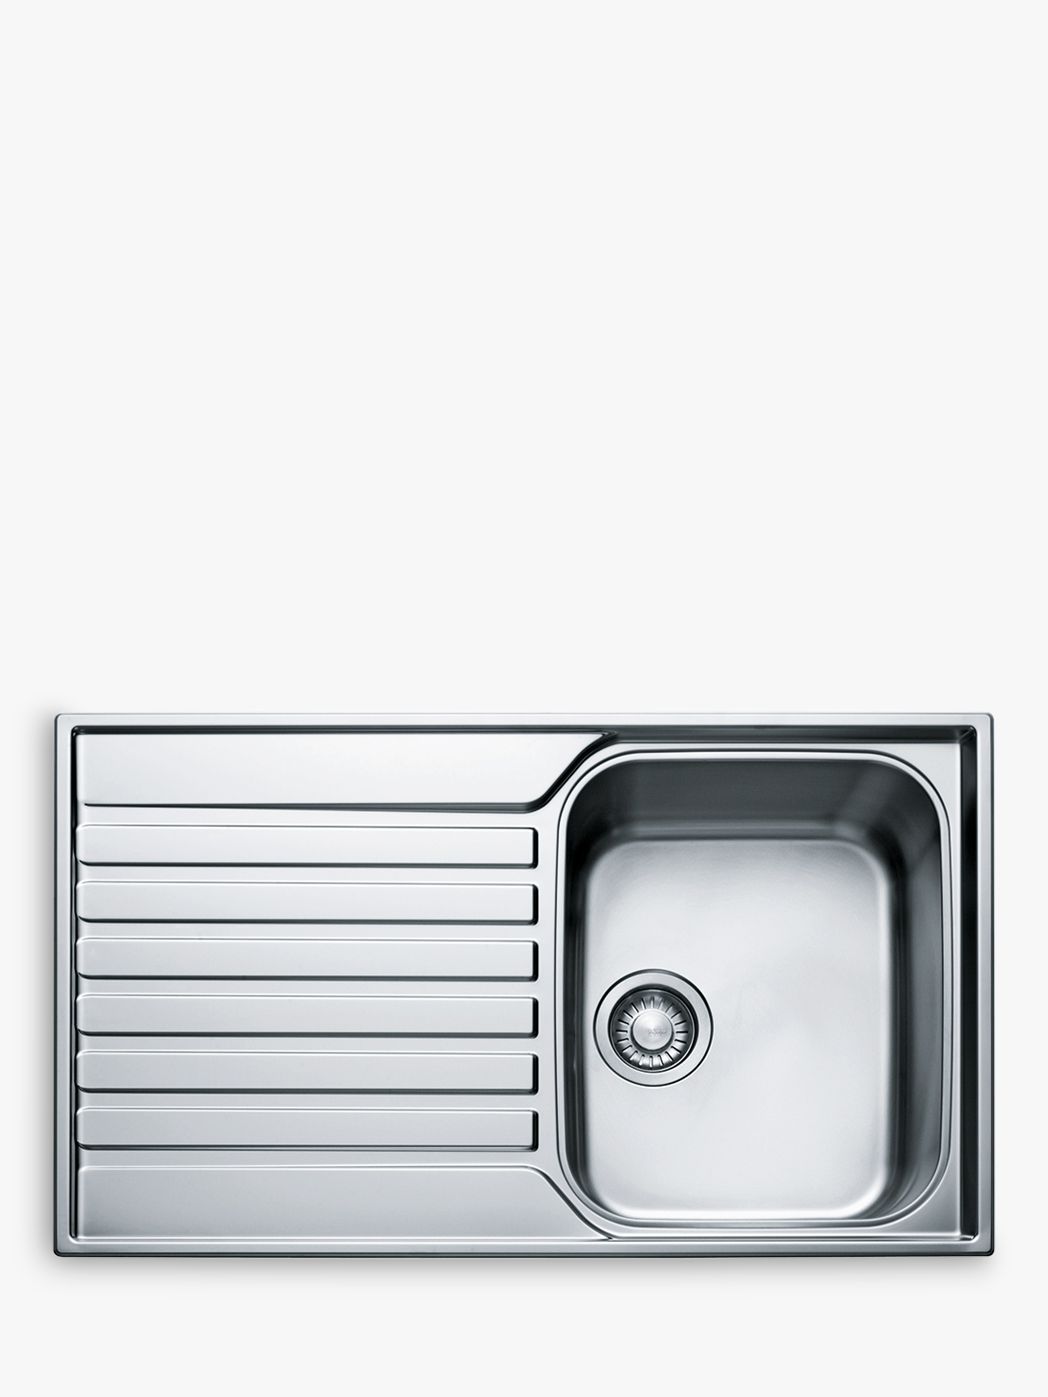 Leisure Euroline El860nc 860x435mm Stainless Steel Compact Kitchen Sink Kitchen Sinks Without Taps Wastes Zigndigital No